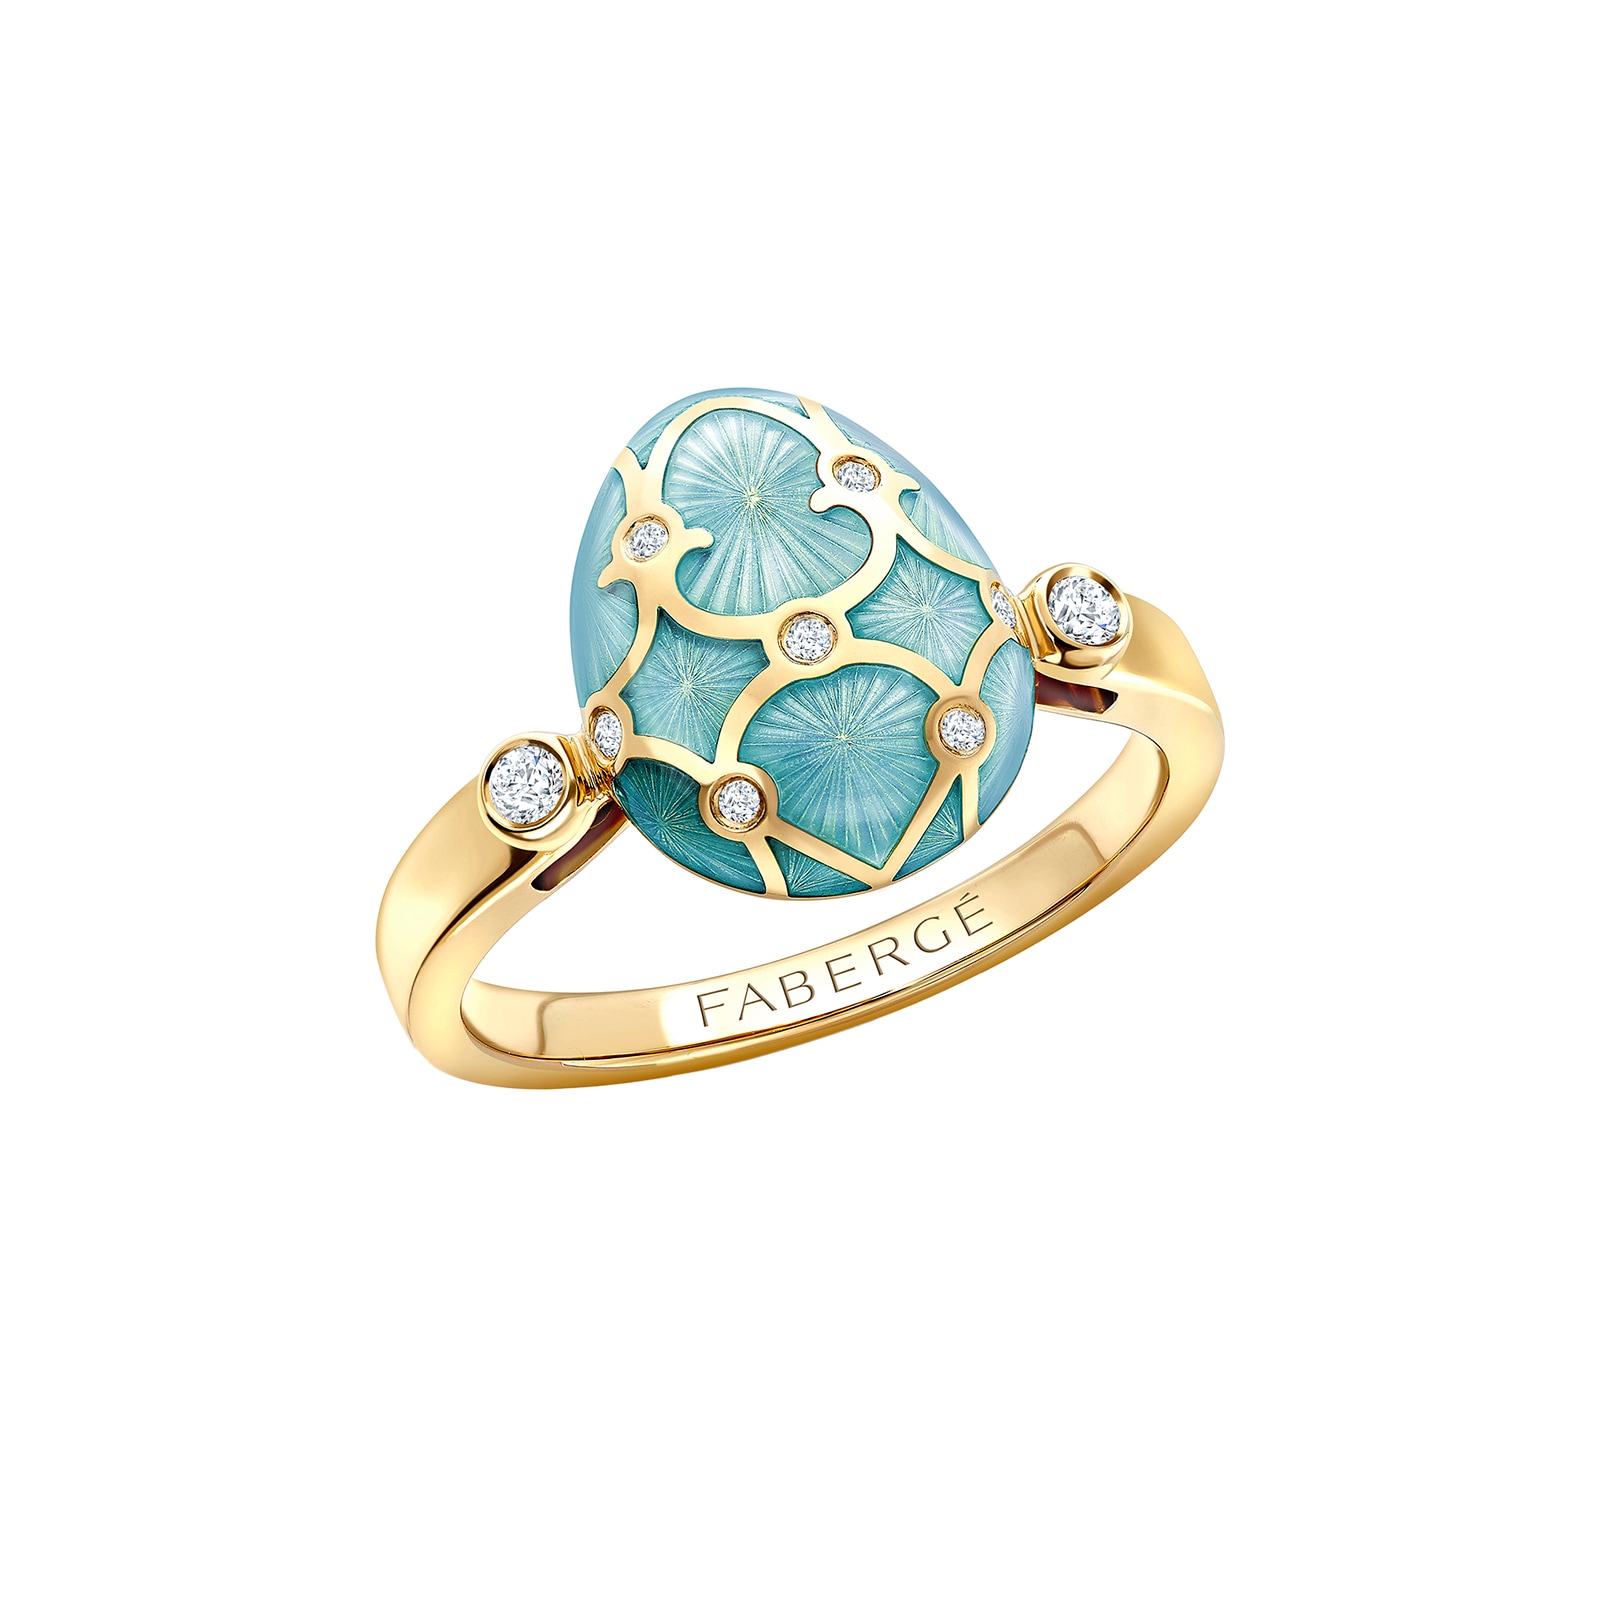 Heritage 18ct Yellow Gold Diamond & Tourquoise Enamel Egg Ring - Ring Size K